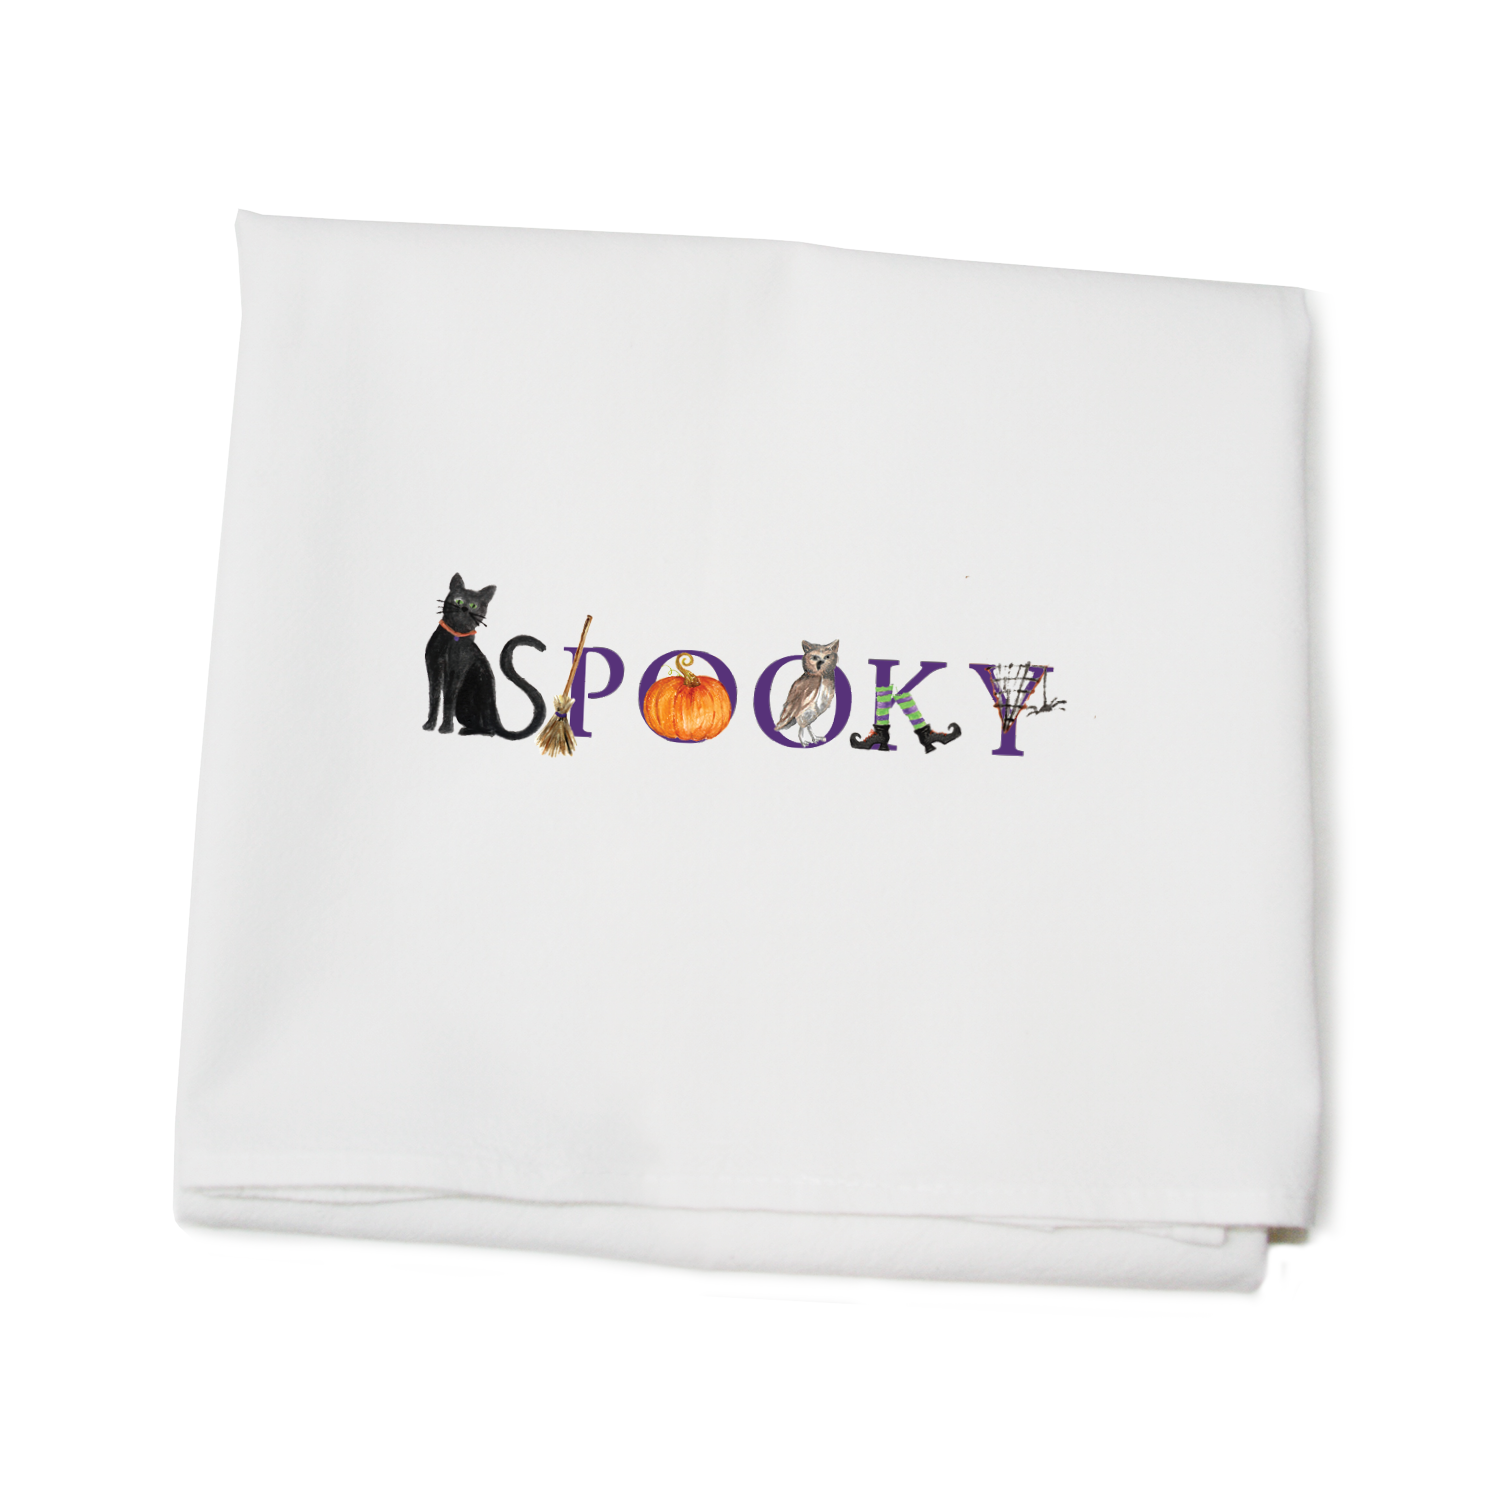 spooky flour sack towel